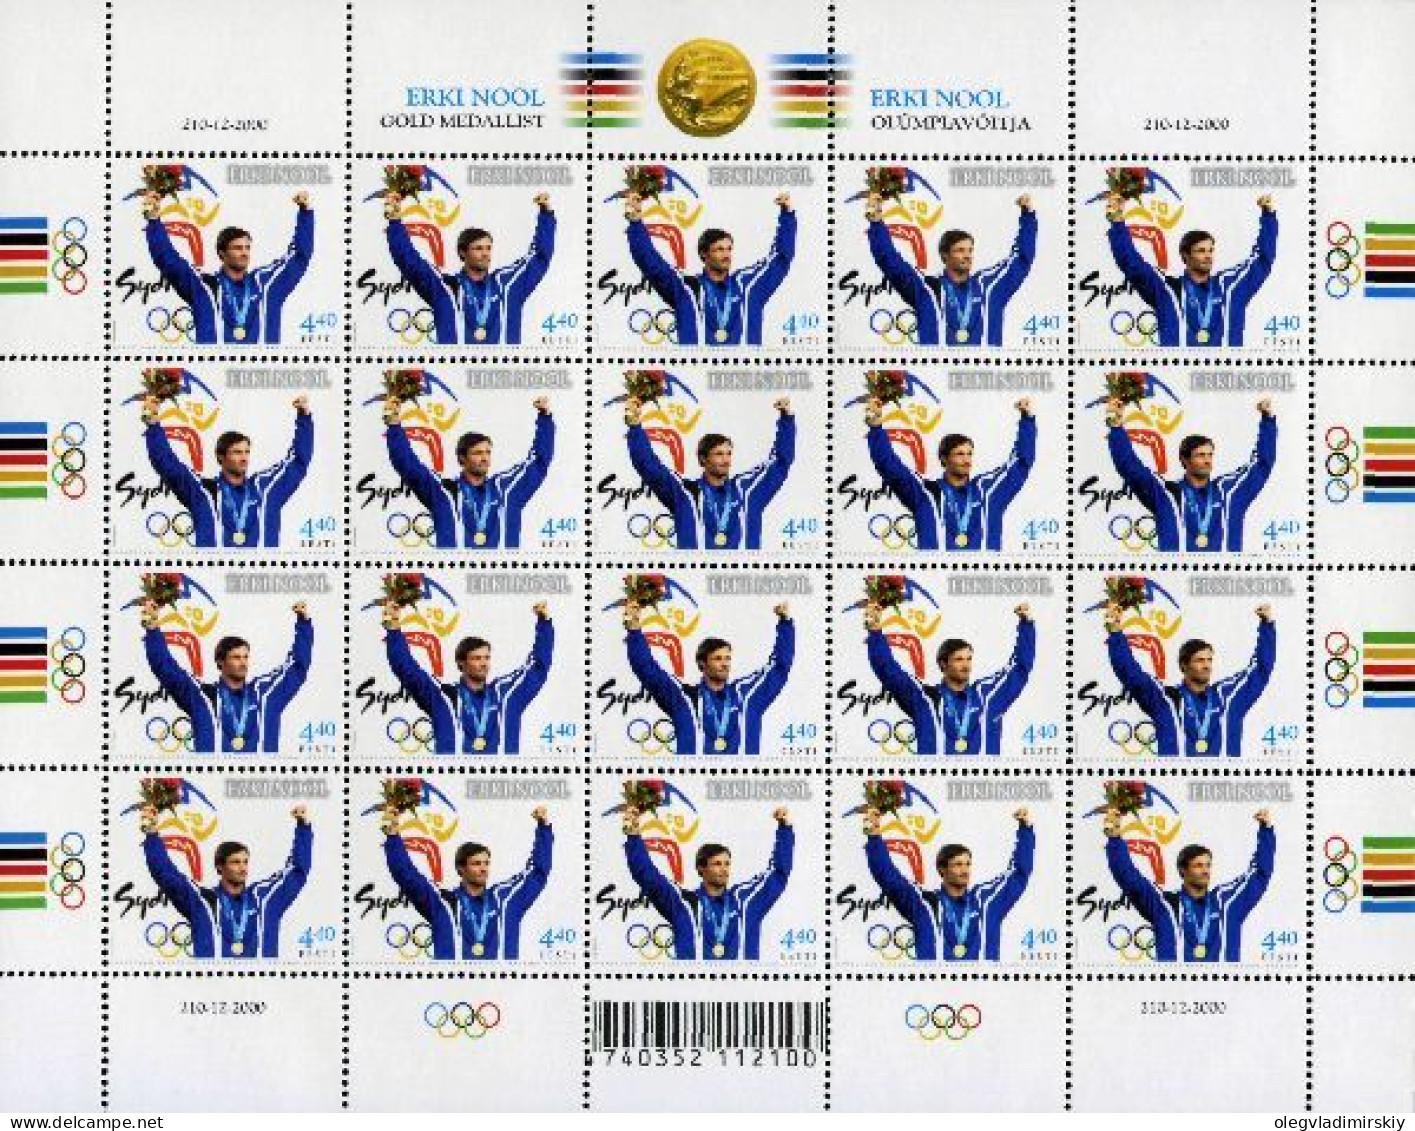 Estonia Estland Estonie 2001 Olympic Champion Erki Nool Sydney Summer Olympics Sheetlet MNH - Verano 2000: Sydney - Paralympic